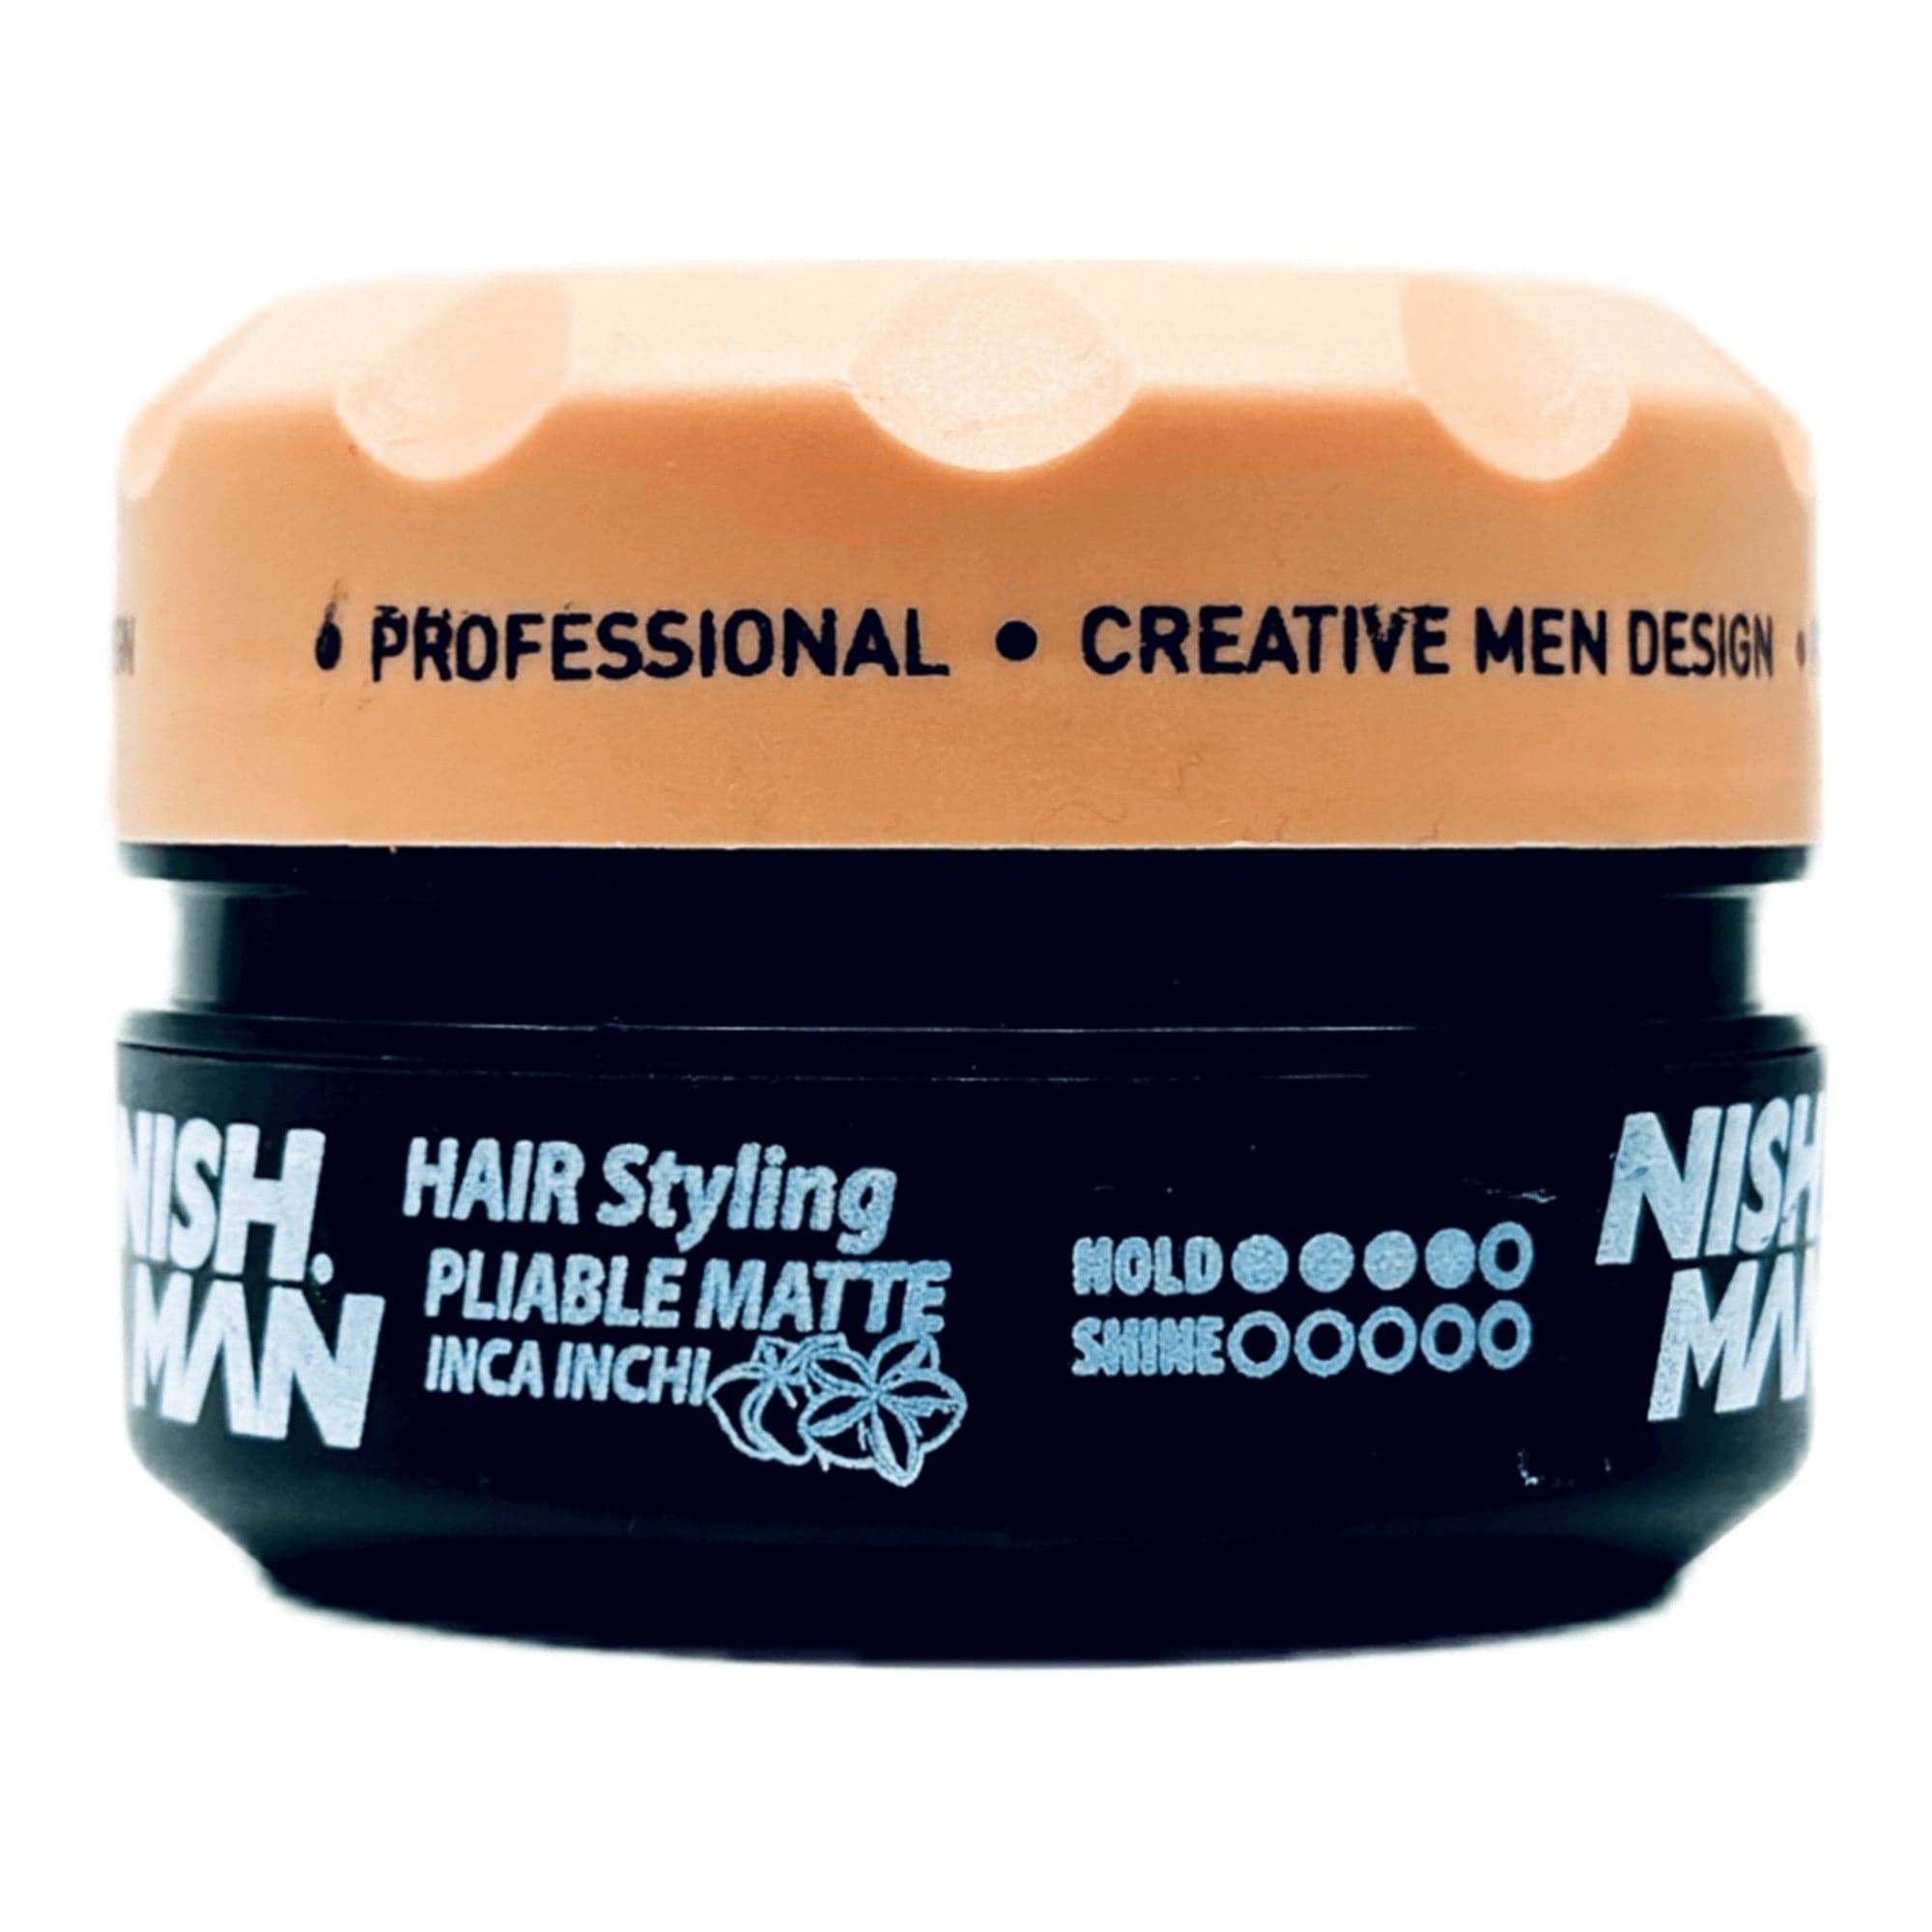 Nishman - Hair Styling M6 Pliable Matte Inca Inchi 100ml